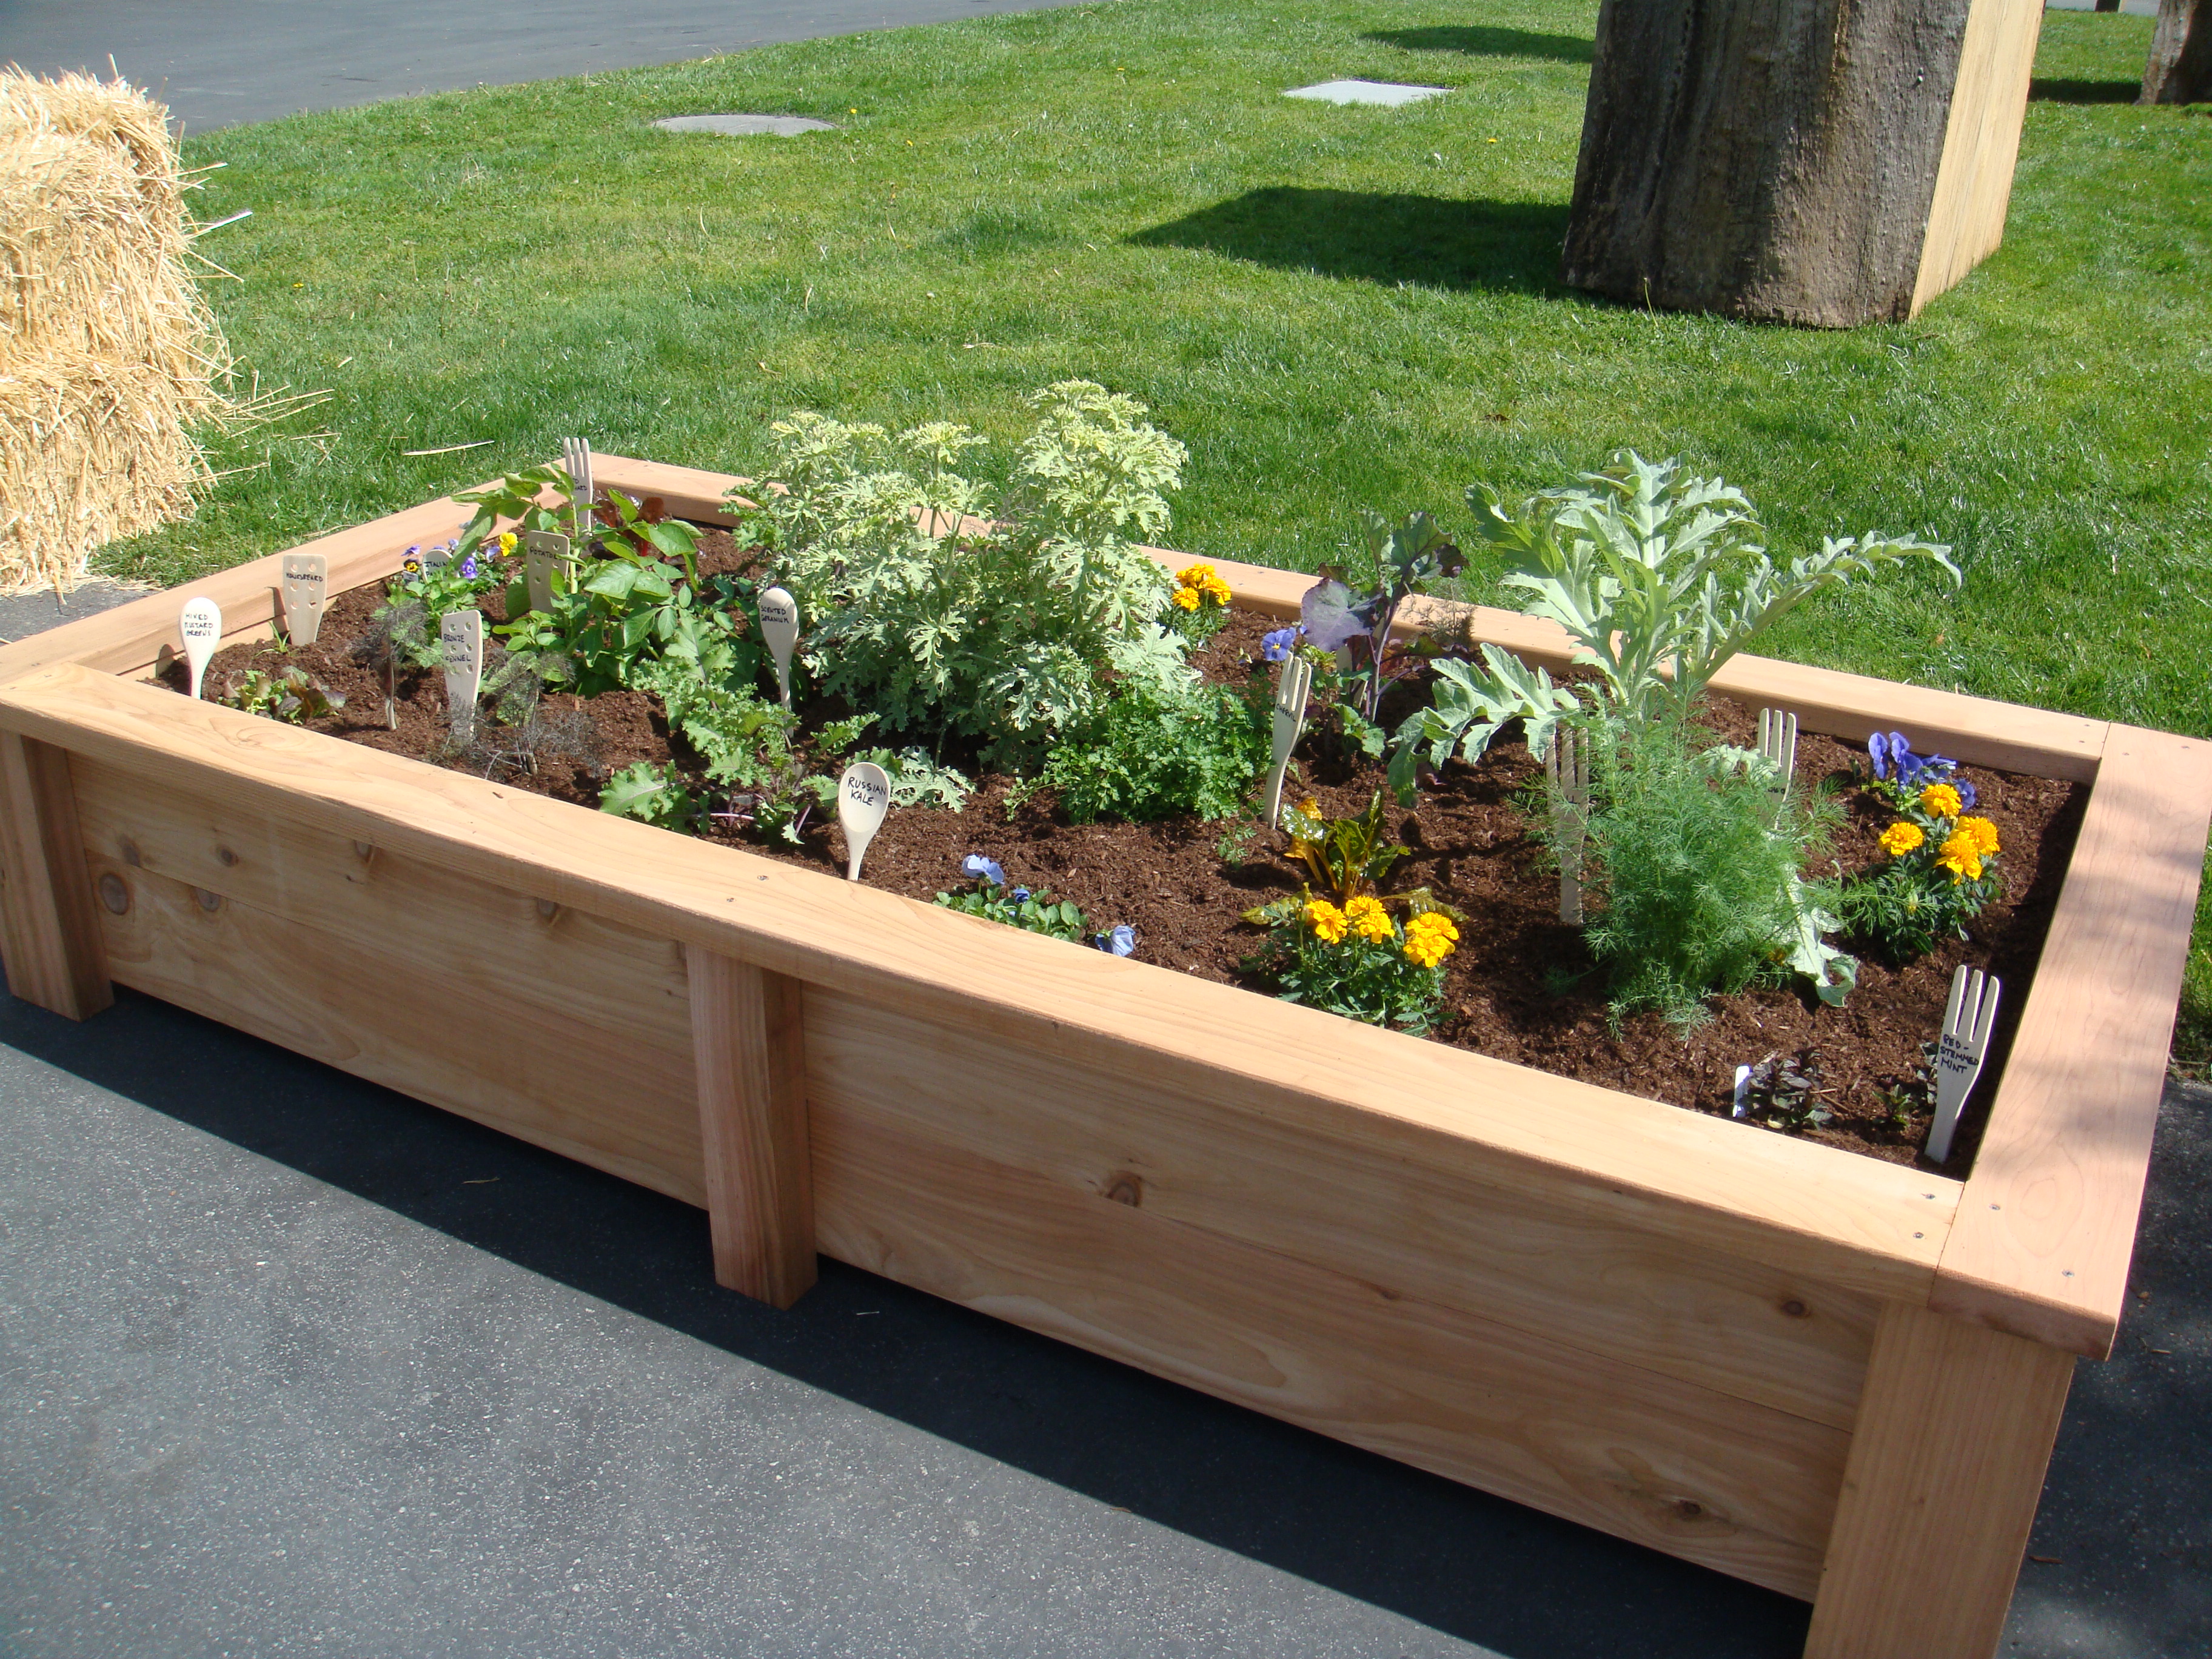 Raised beds for a vegetable garden. Gardening